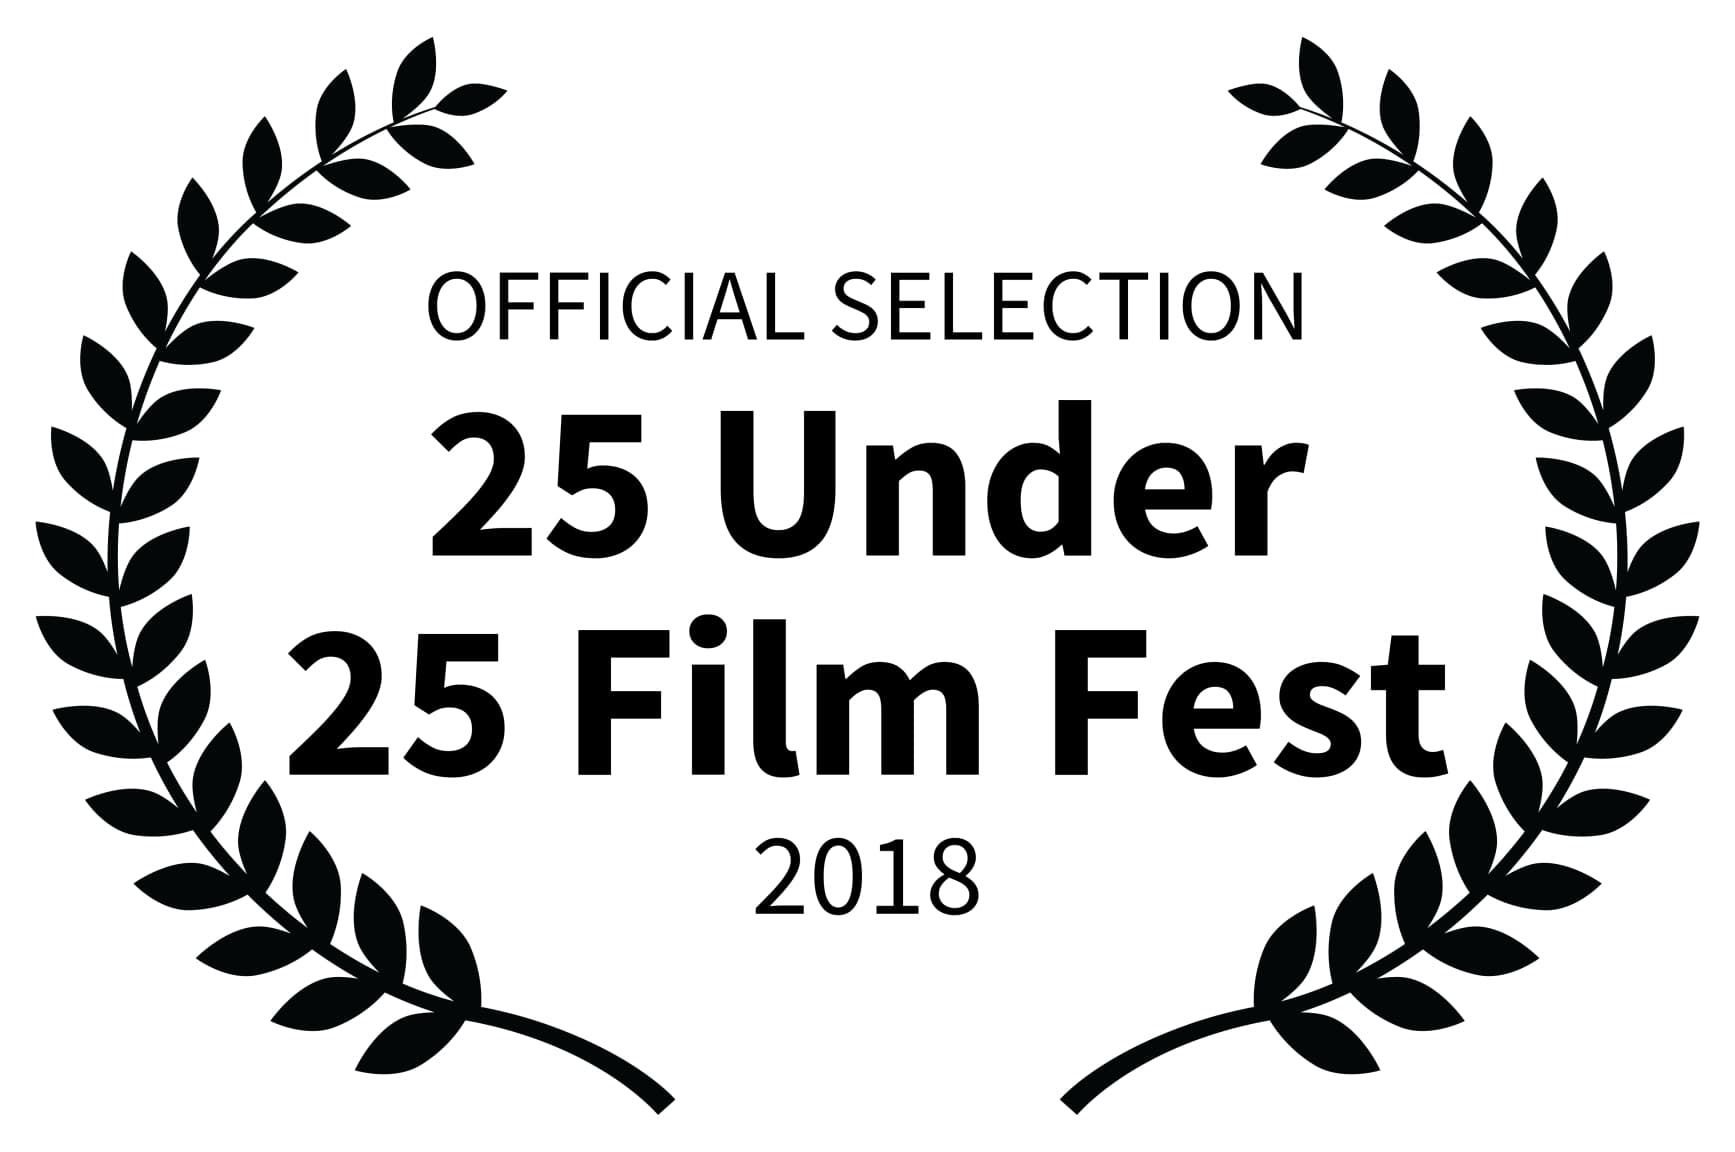 OFFICIAL SELECTION - 25 Under 25 Film Fest - 2018.jpg